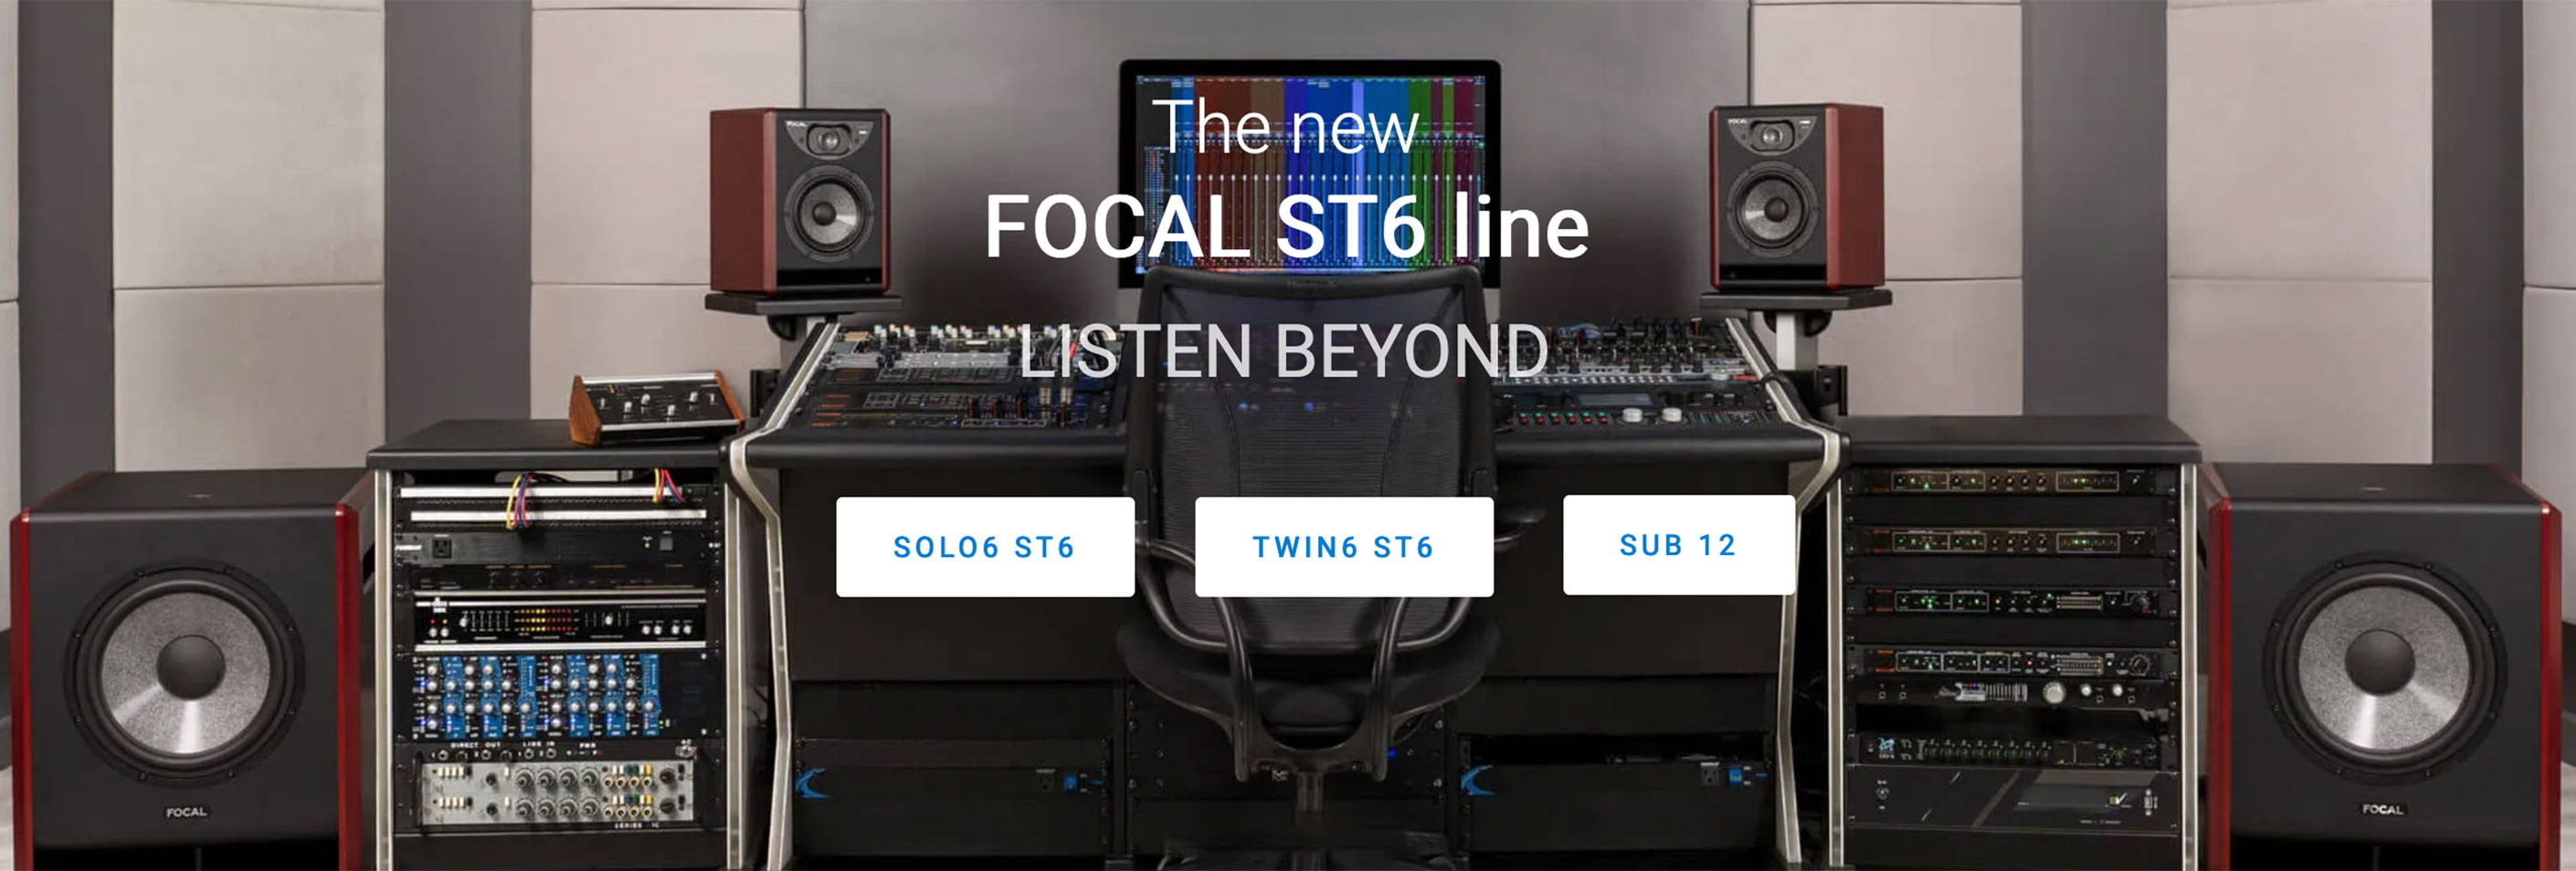 Focal ST6 Line